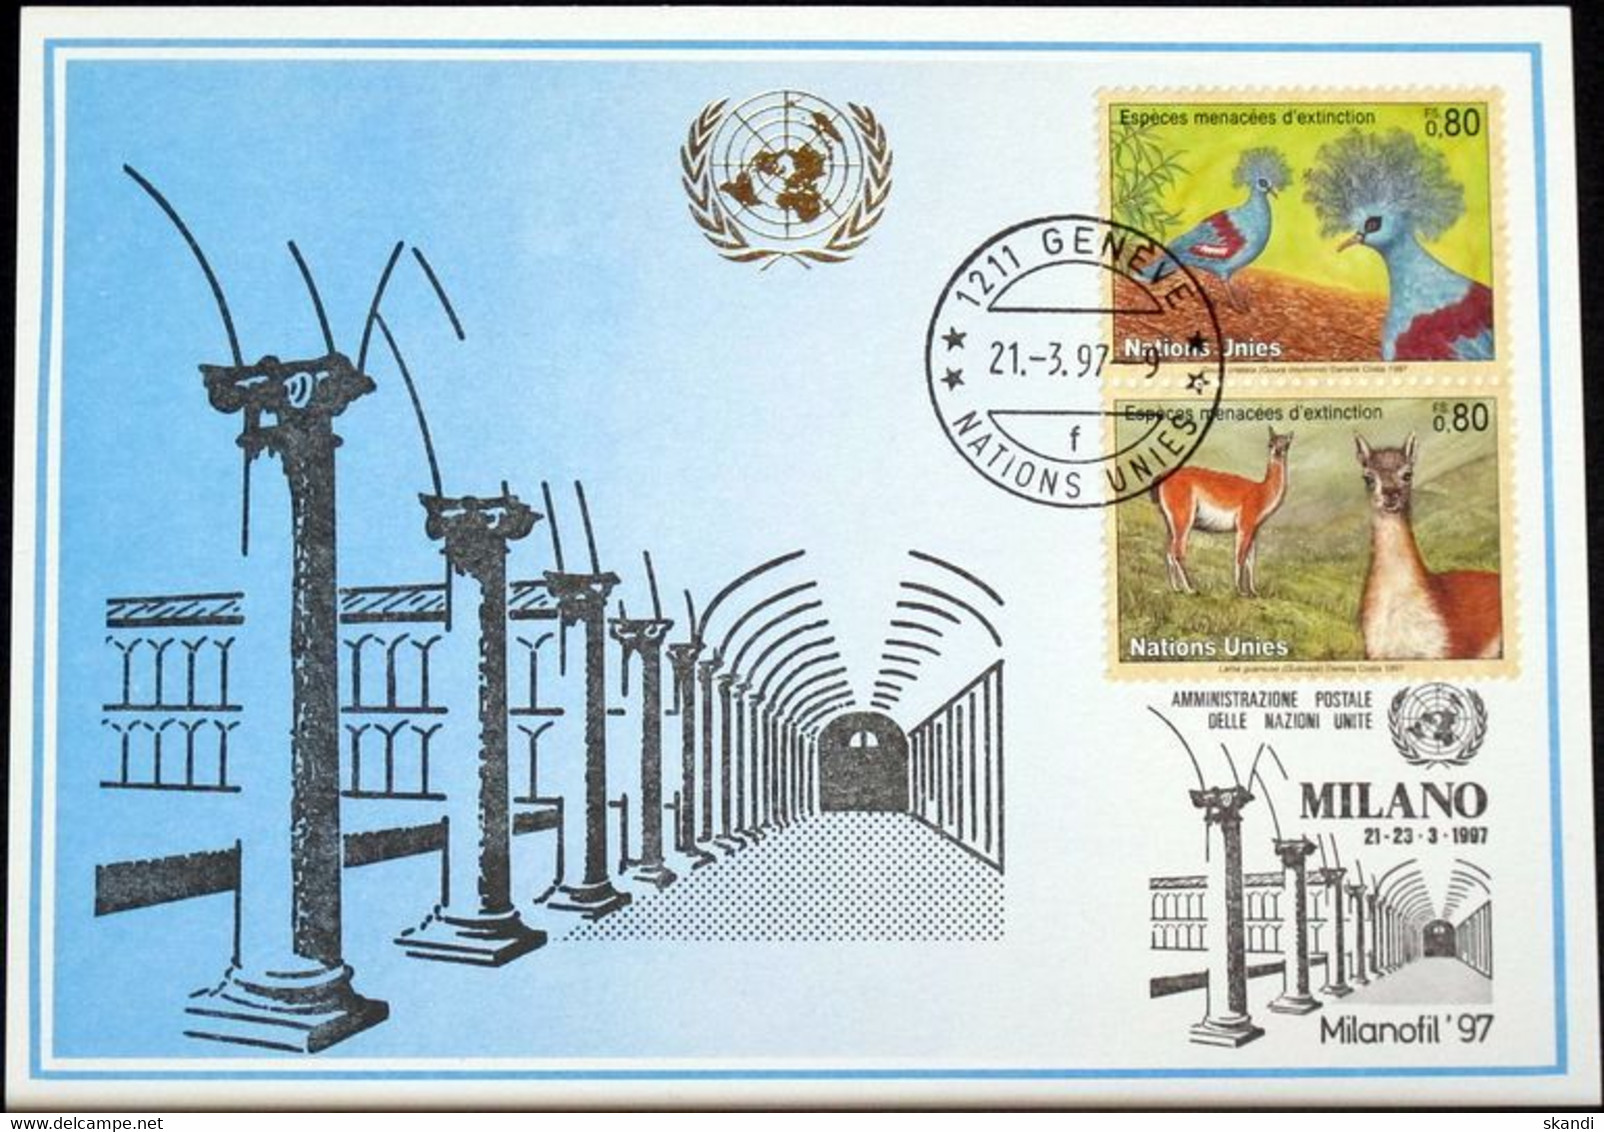 UNO GENF 1997 Mi-Nr. 277 Blaue Karte - Blue Card - Covers & Documents